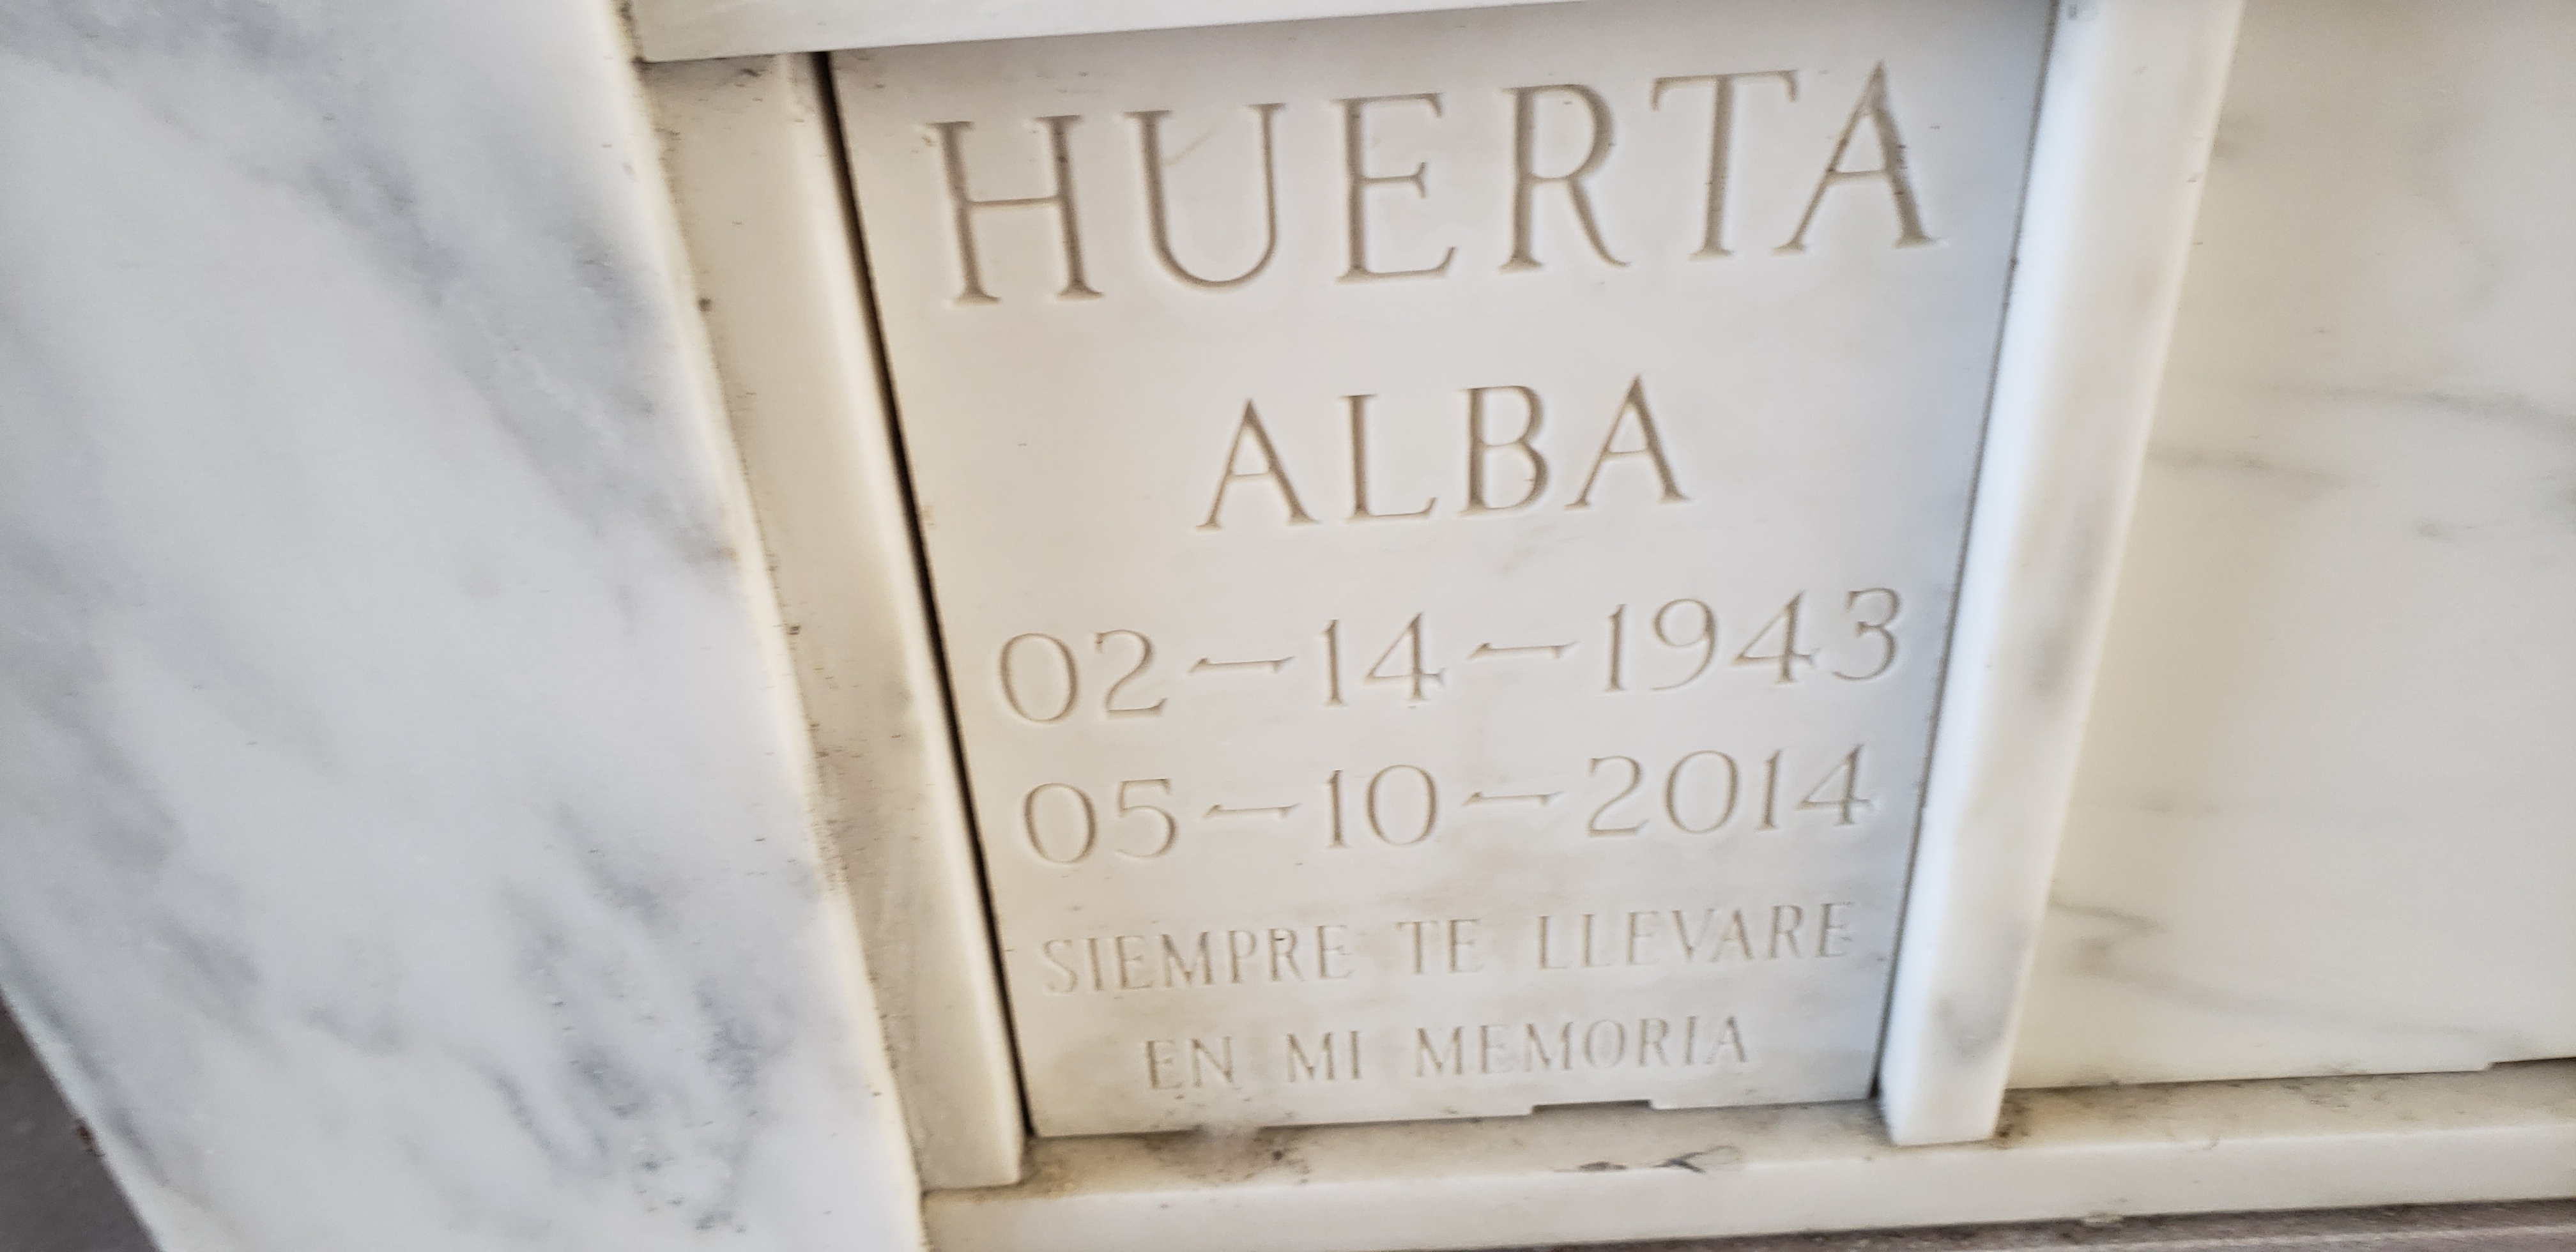 Alba Huerta